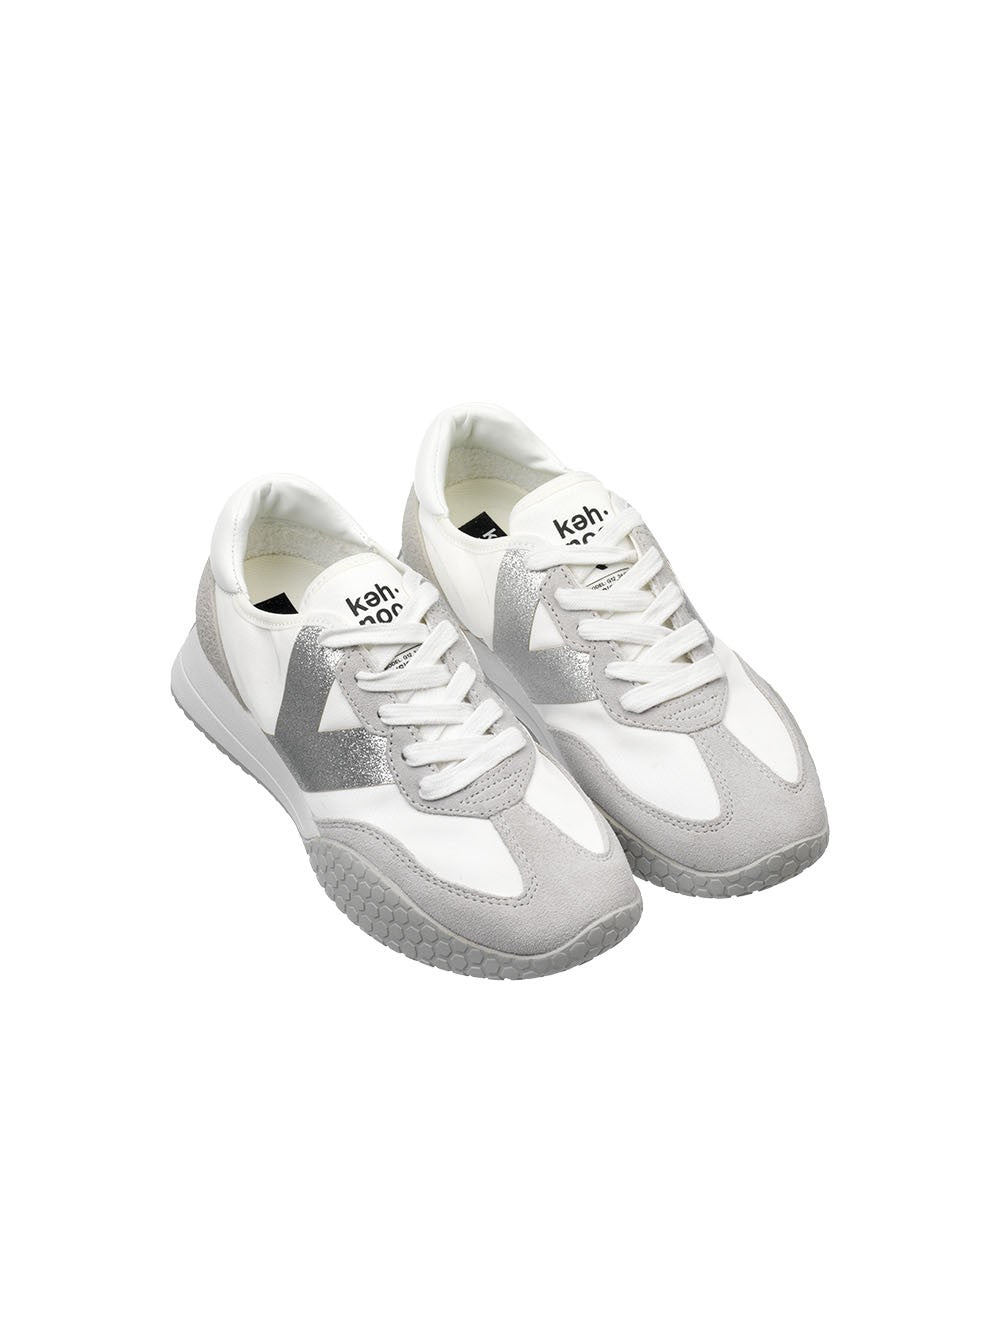 Ambassador in White/Silver Sneakers Keh-Noo   